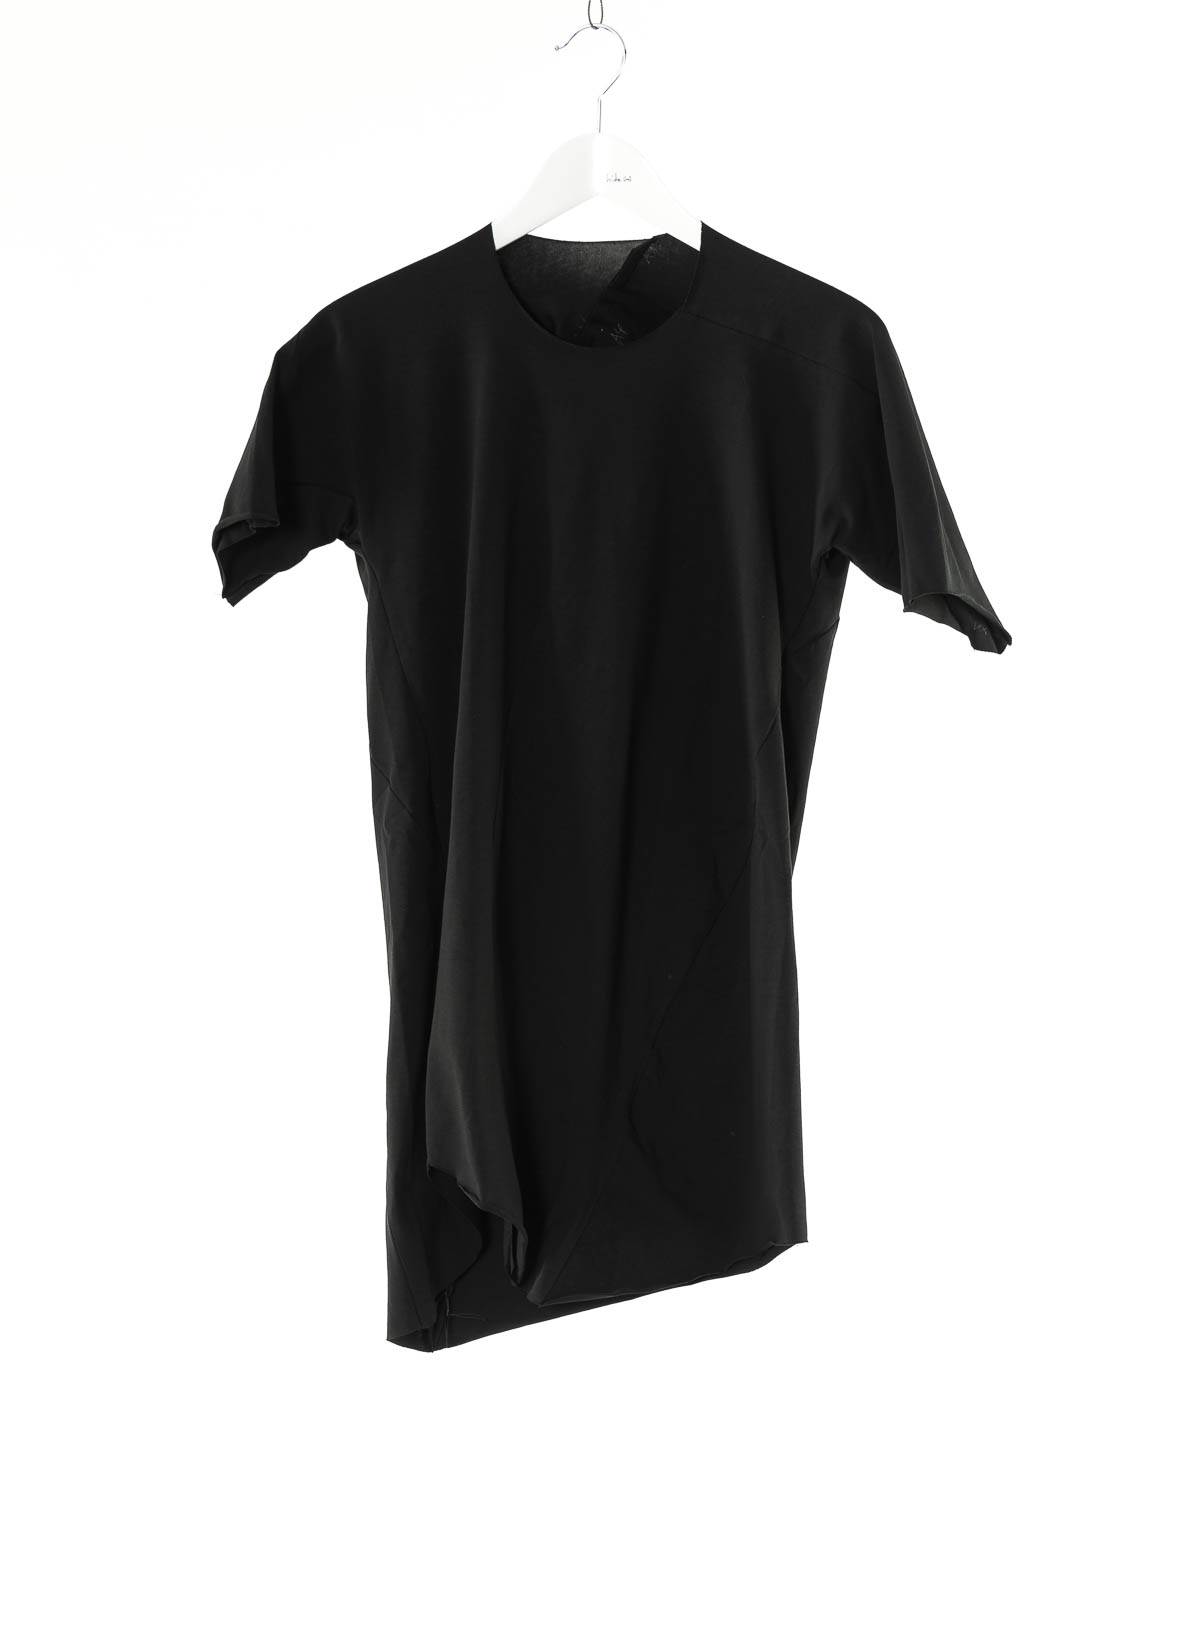 hide-m | LEON EMANUEL BLANCK Distortion Curved T-Shirt, black cotton